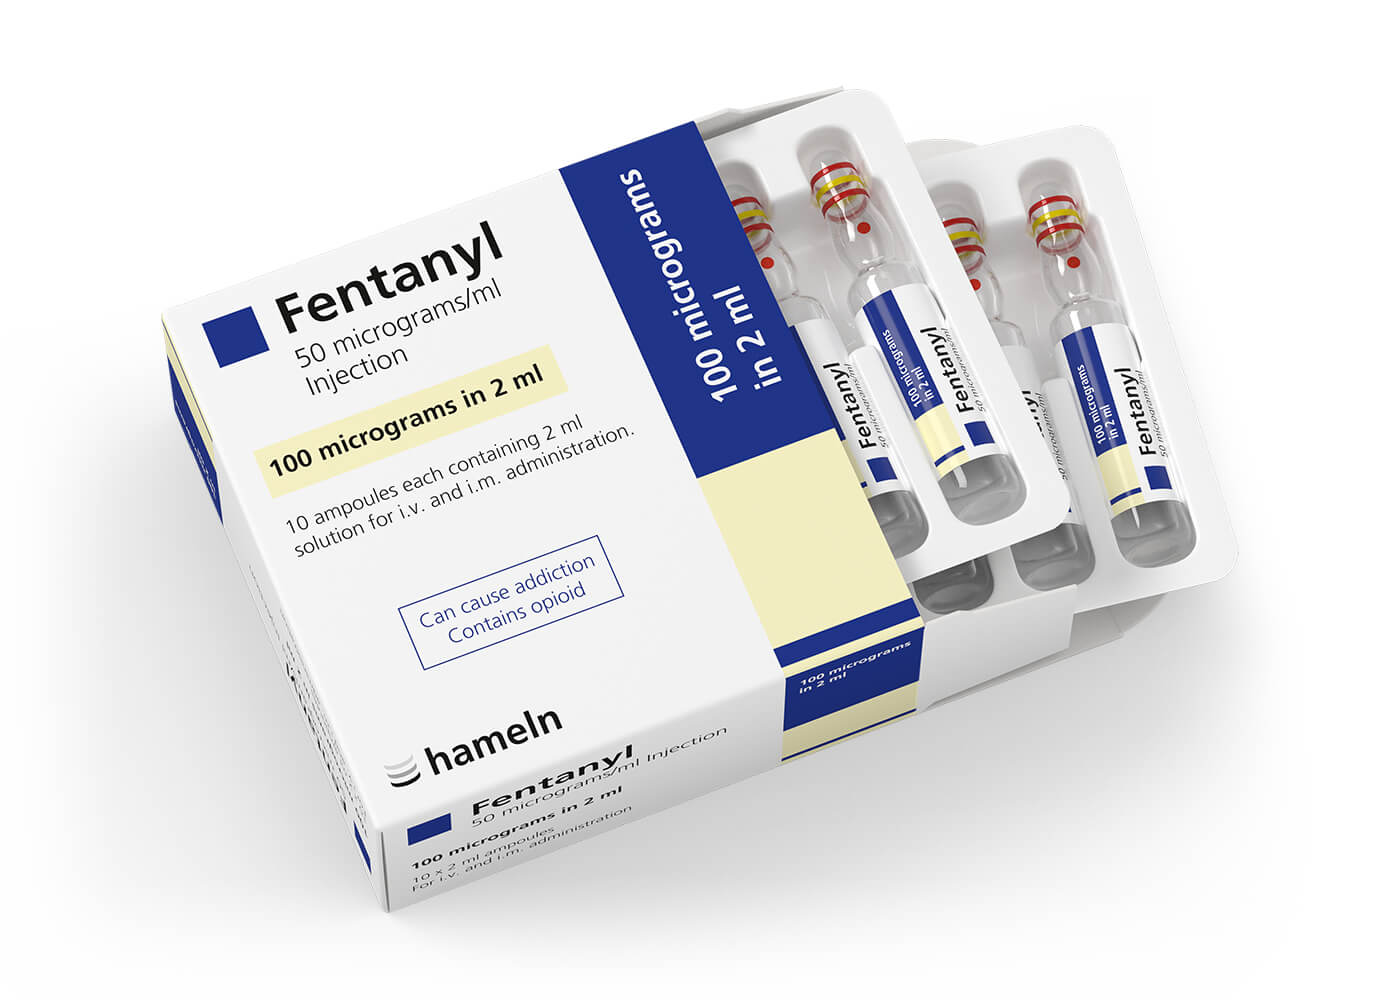 Fentanyl_UK_50_mcg-ml_in_2_ml_Pack-Amp_10St_2020-14